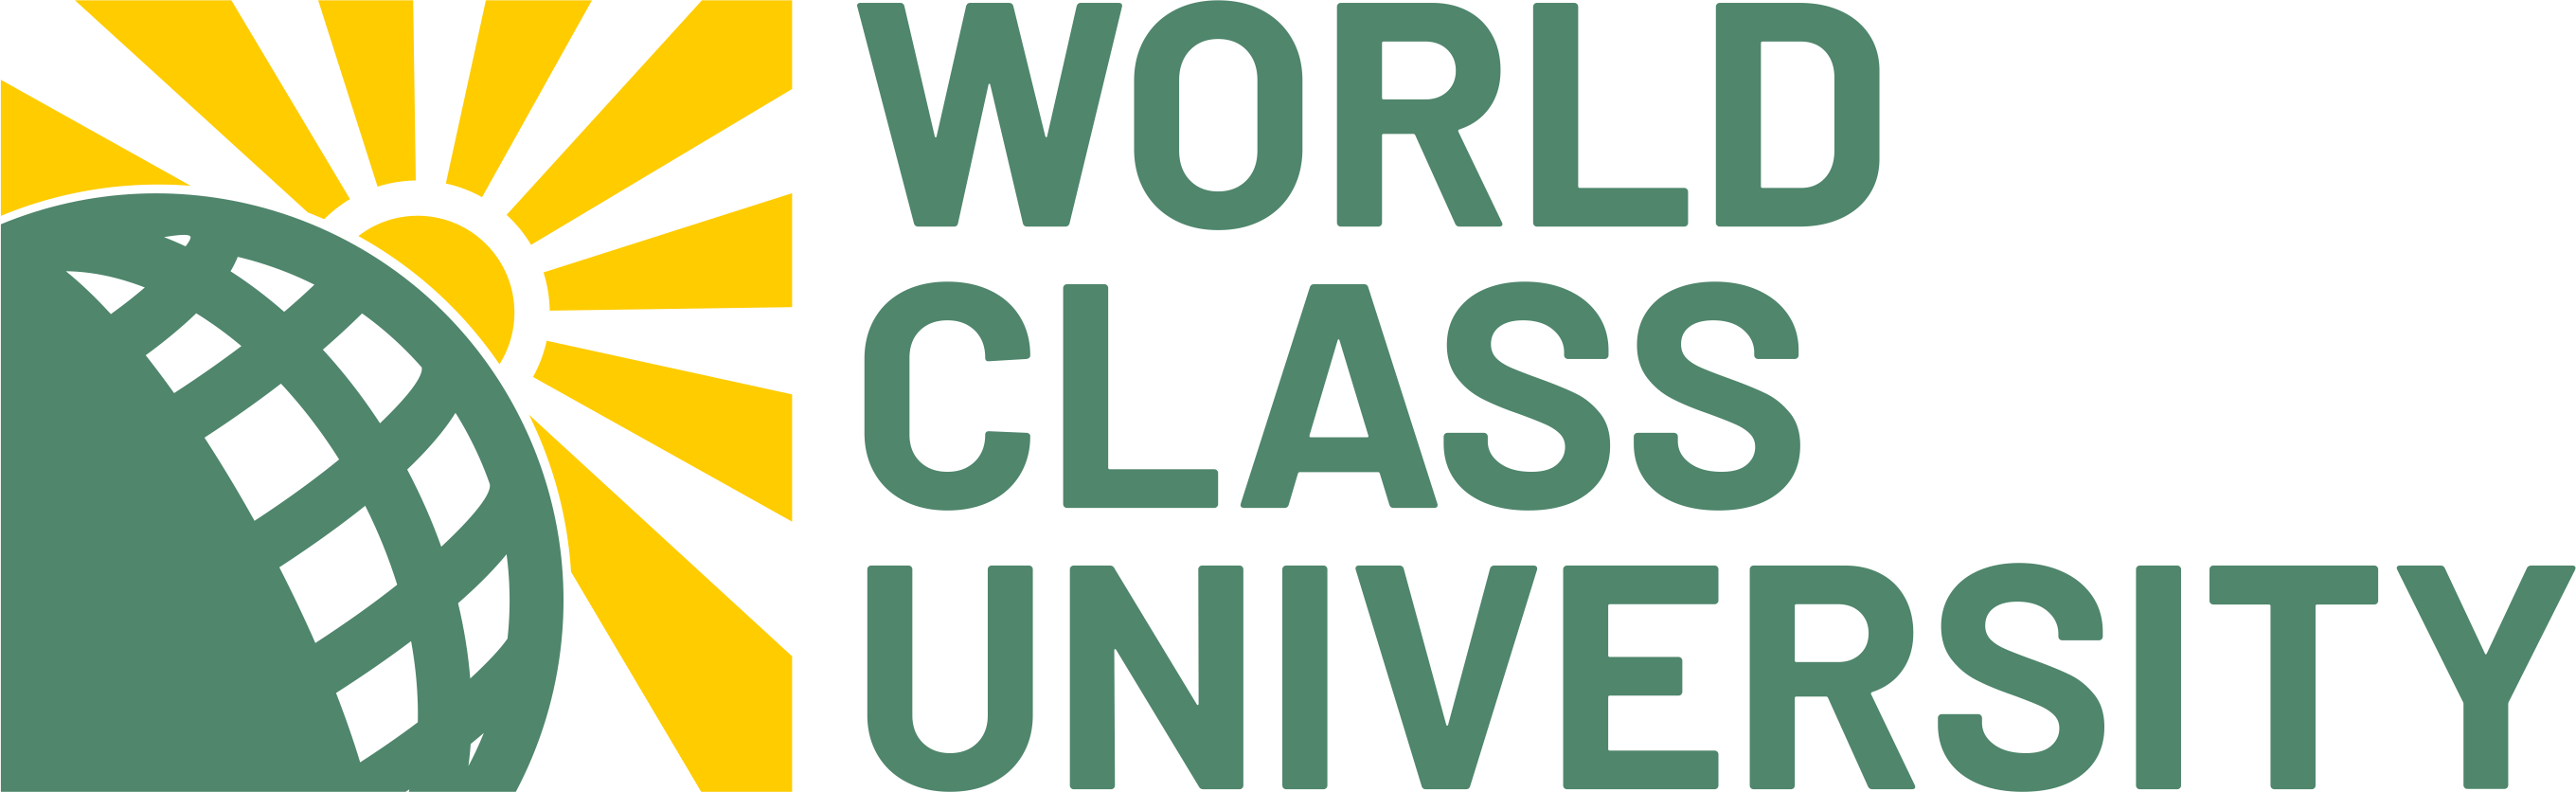 World Class University